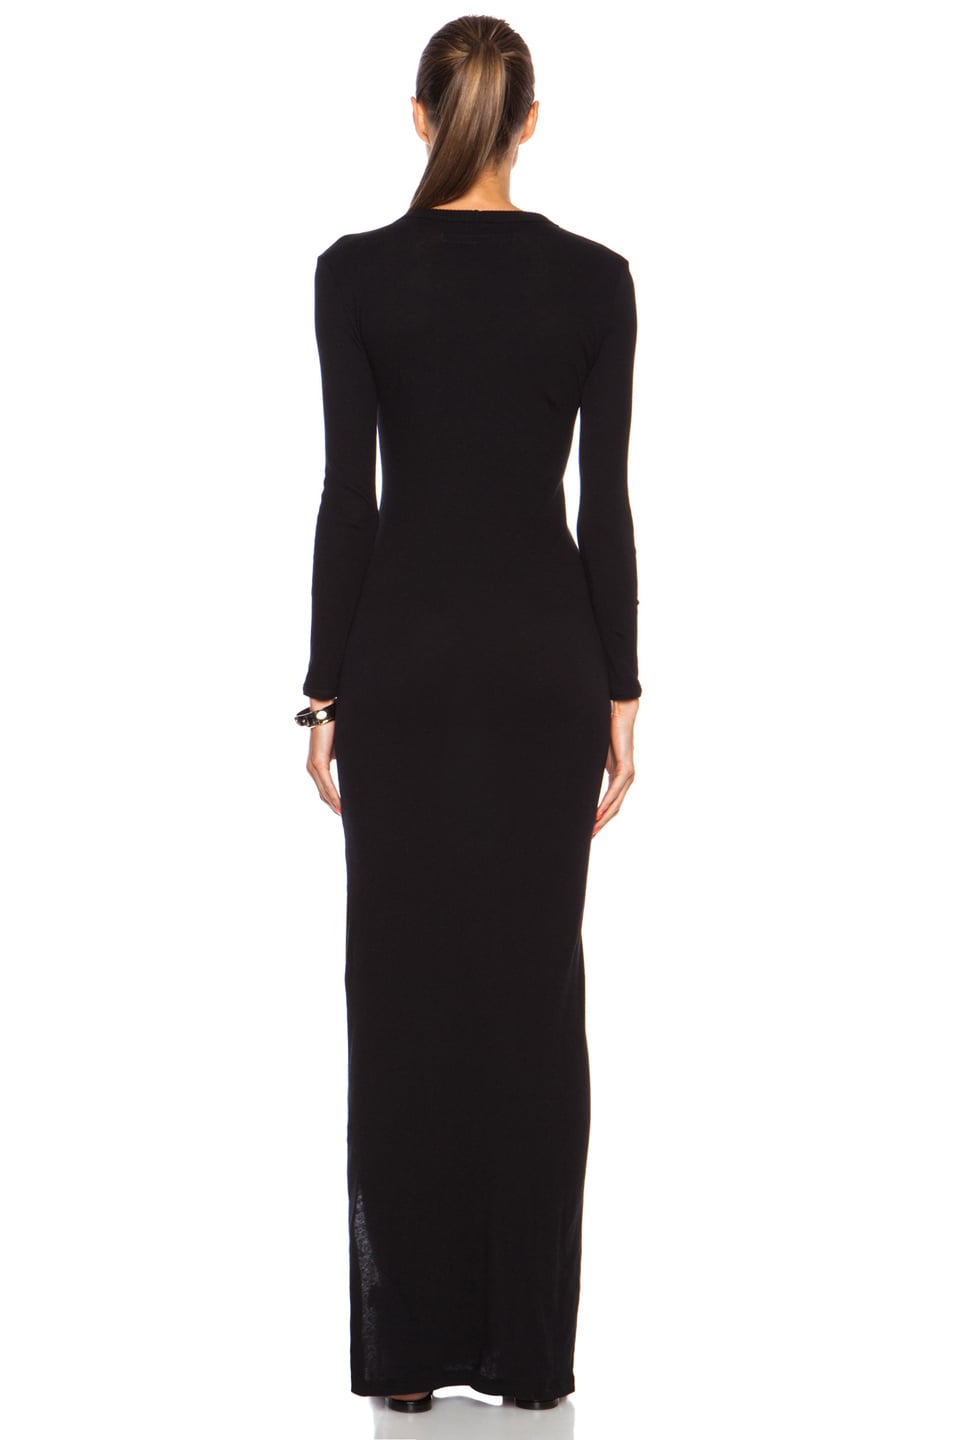 Enza Costa Cashmere Side Slit Maxi Cotton-Blend Dress in Black | FWRD